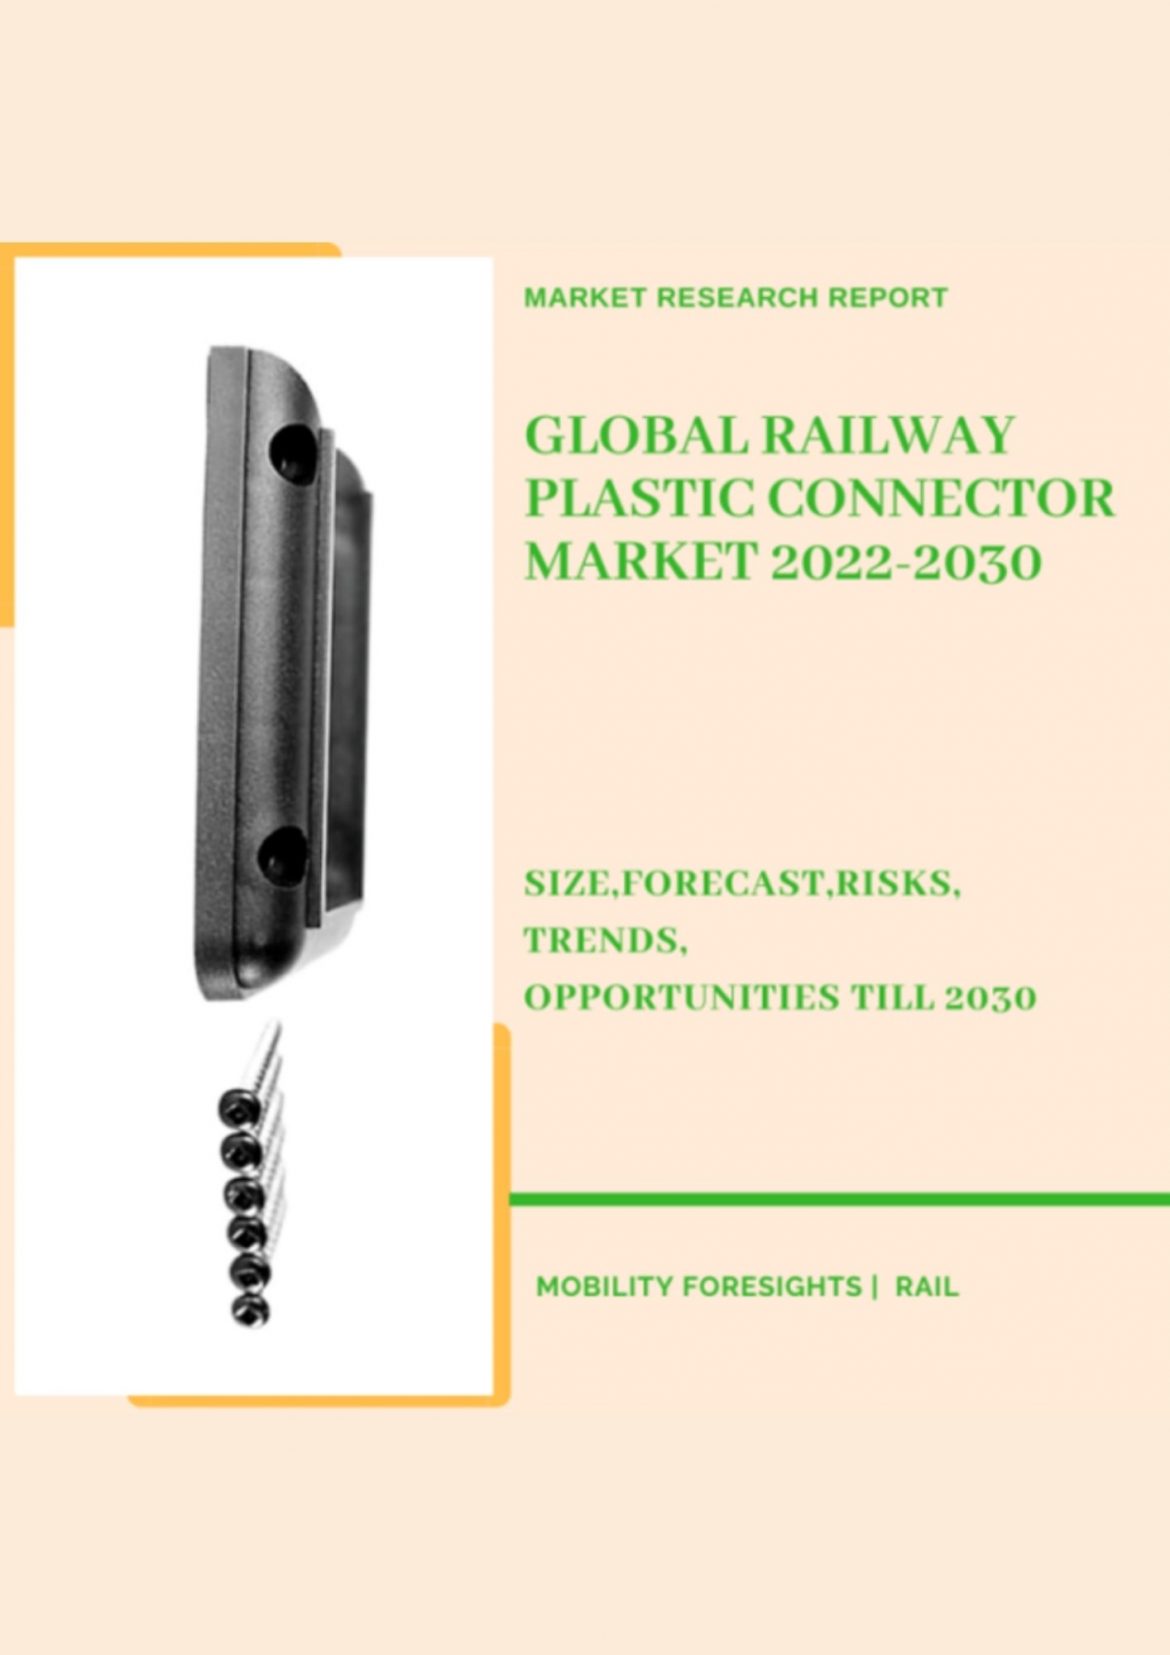 Global Railway Plastic Connector Market 2022-2030